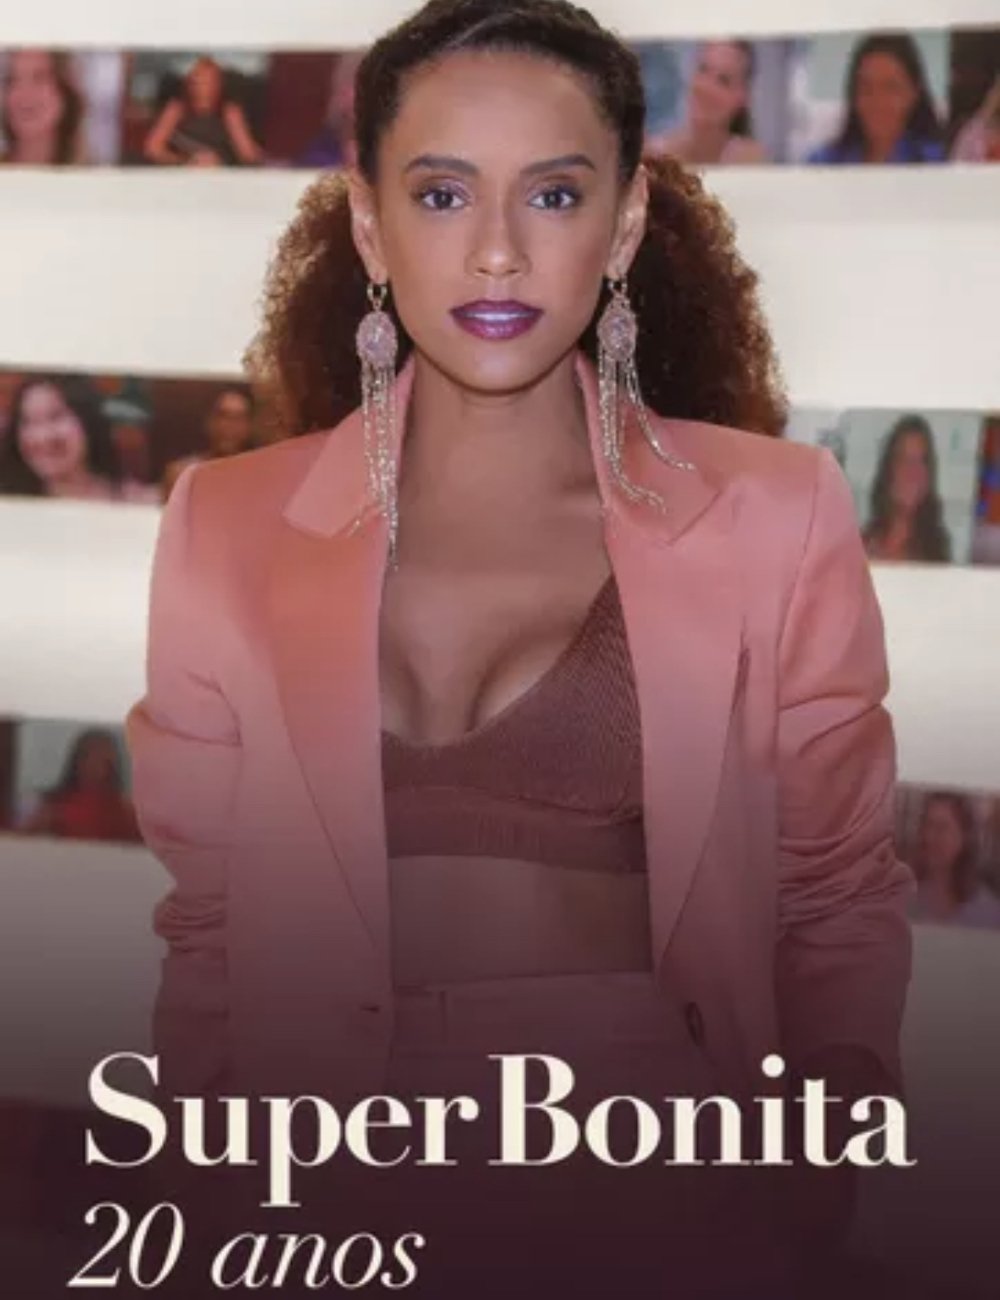 Superbonita - programa de tv - produções de beleza - beleza - streaming - https://stealthelook.com.br